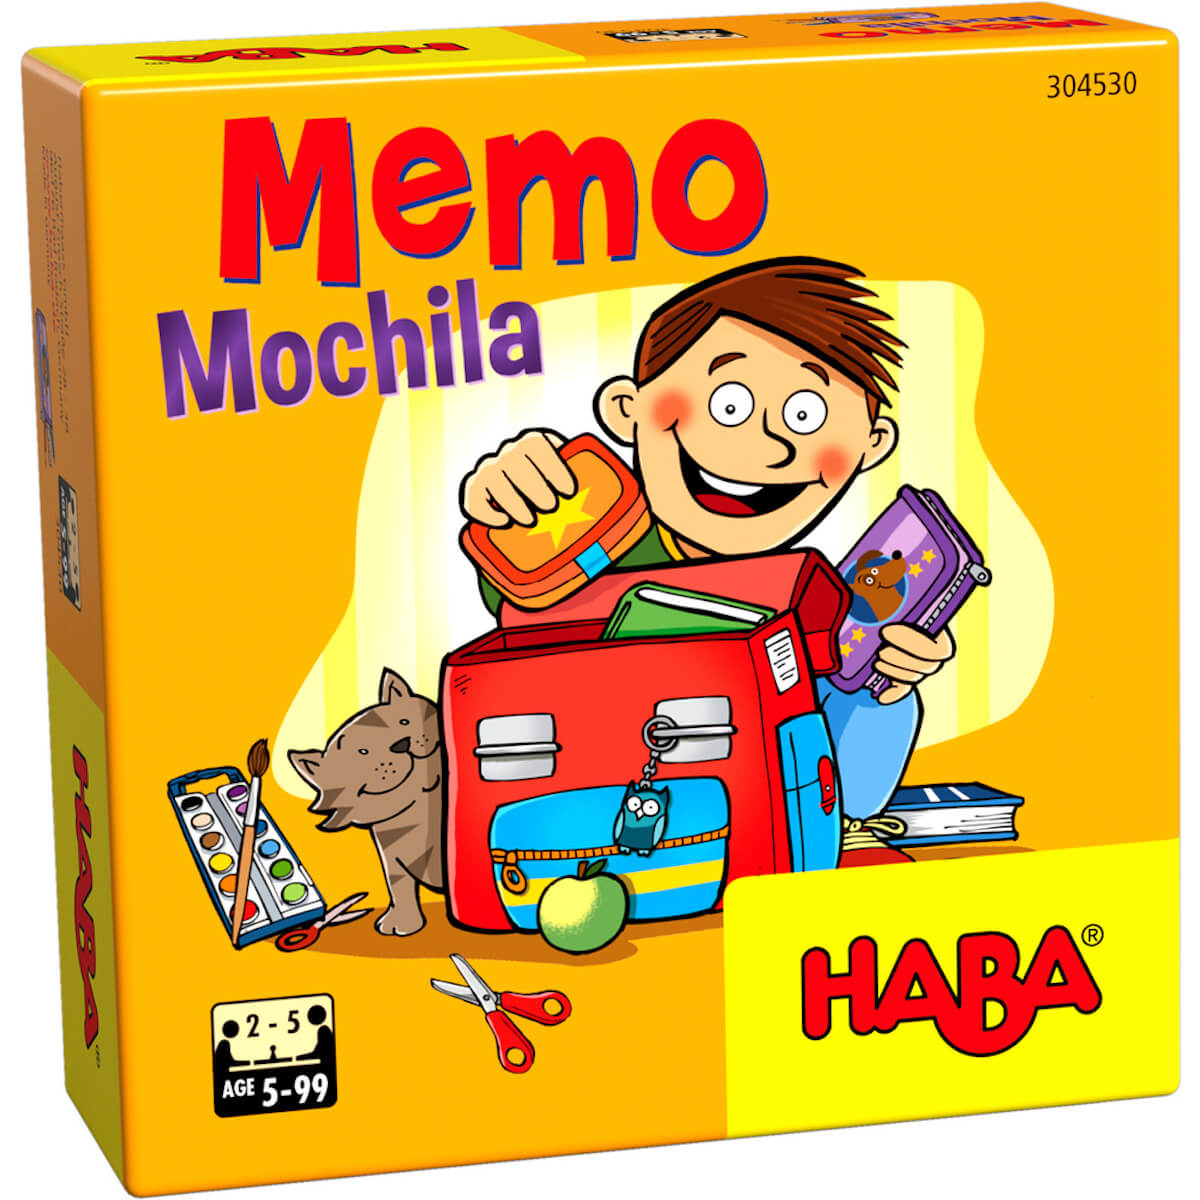 Haba Memo Mochila Memory Game